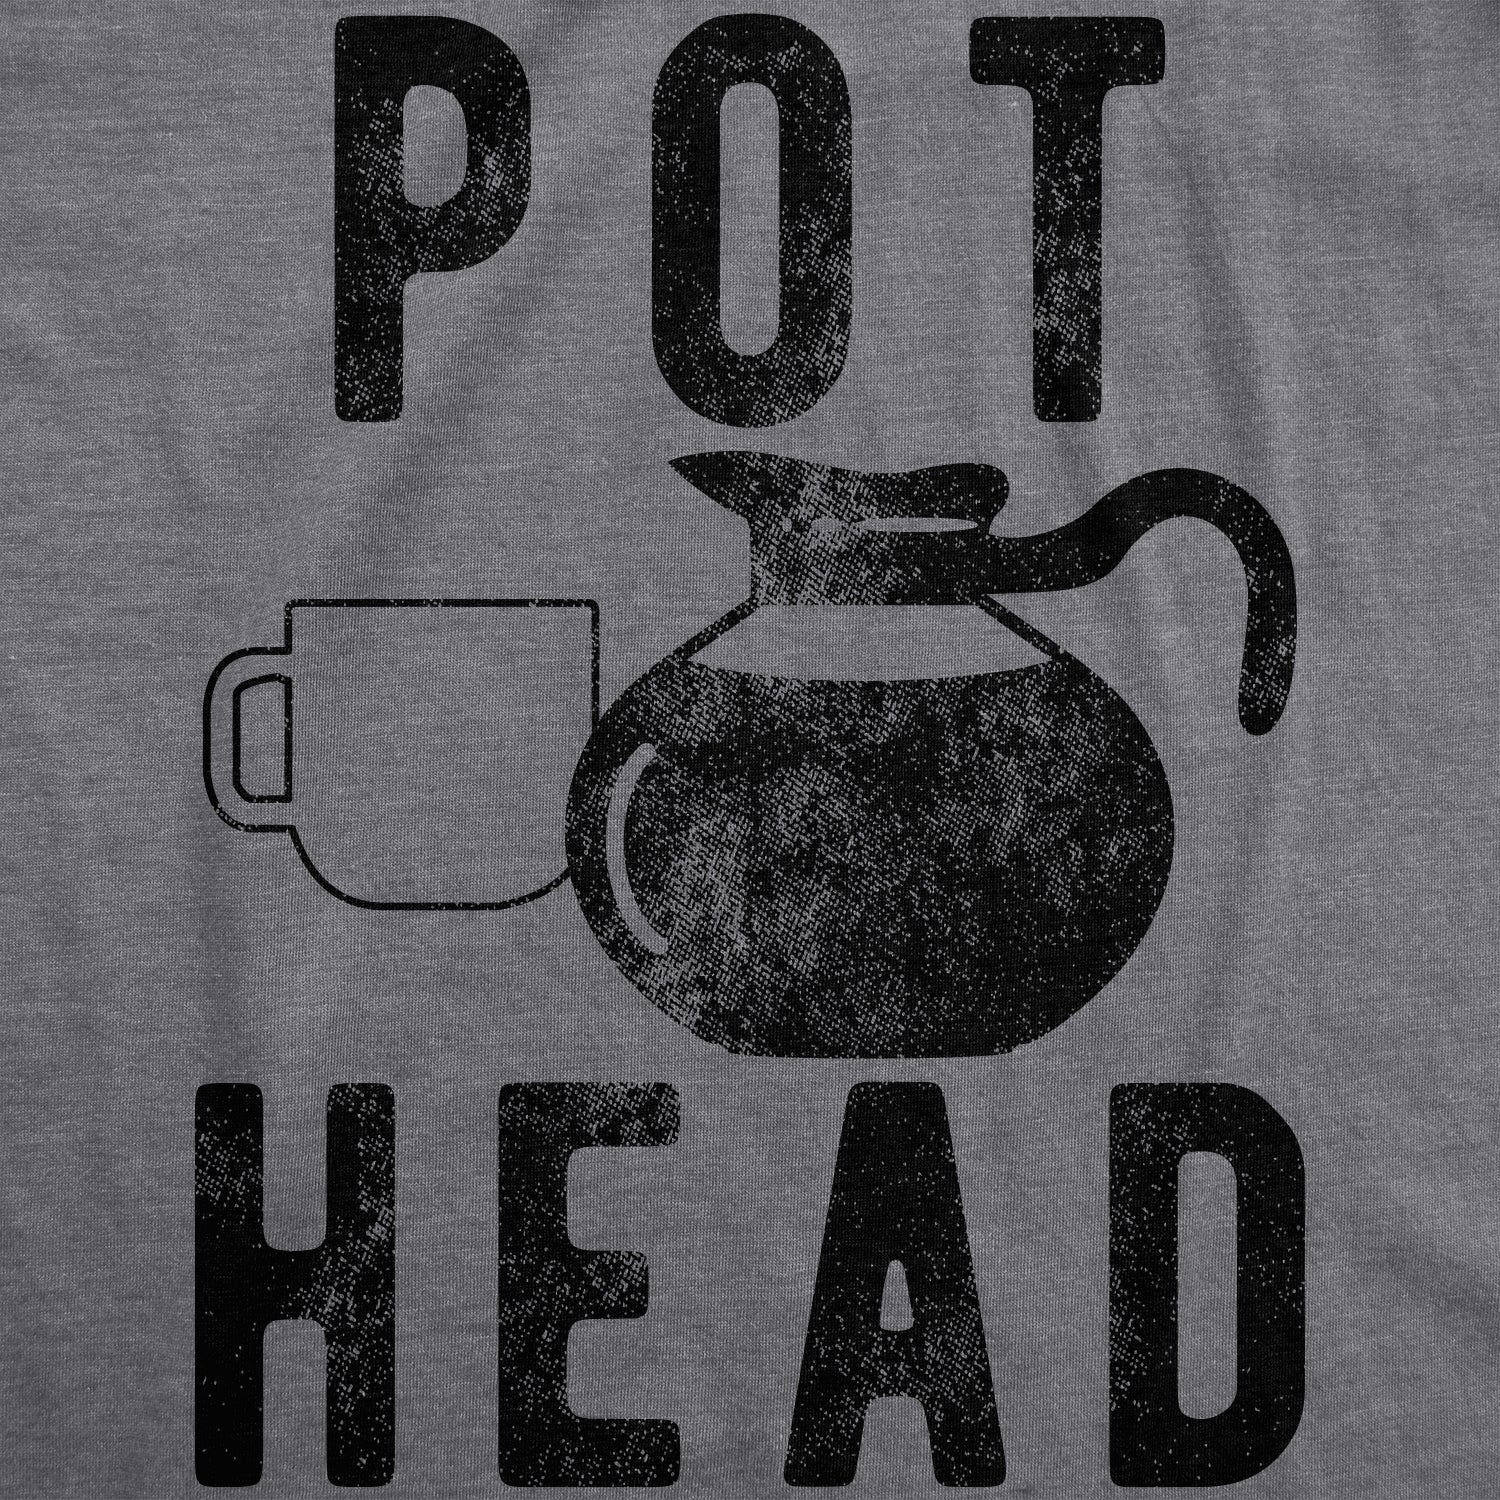 Funny Dark Heather Grey Pot Head Mens T Shirt Nerdy Coffee faire Tee